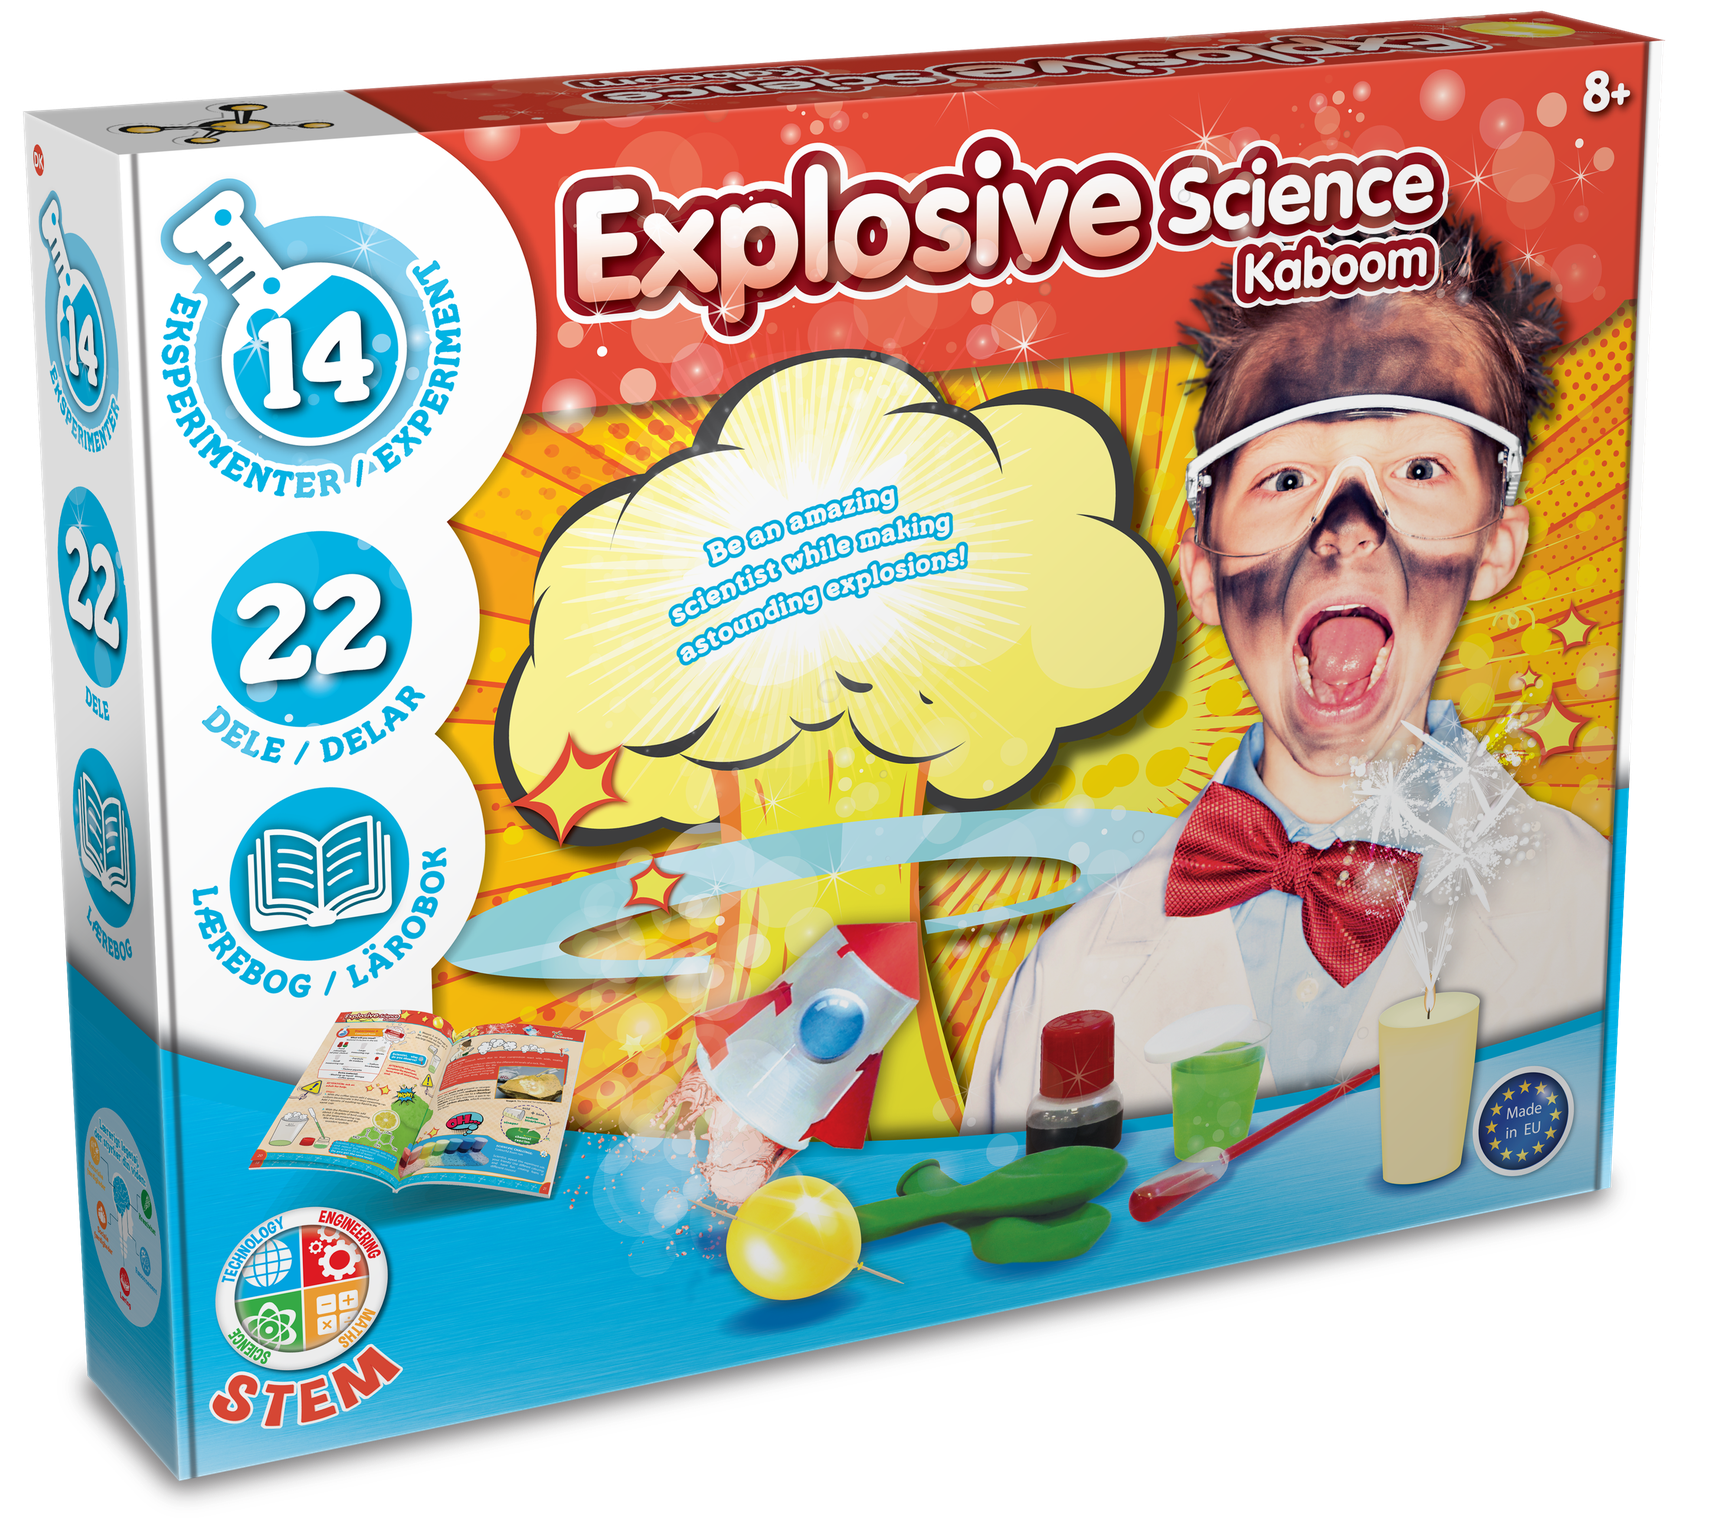 Sceince4you - Explosive Science Kaboom (40181)